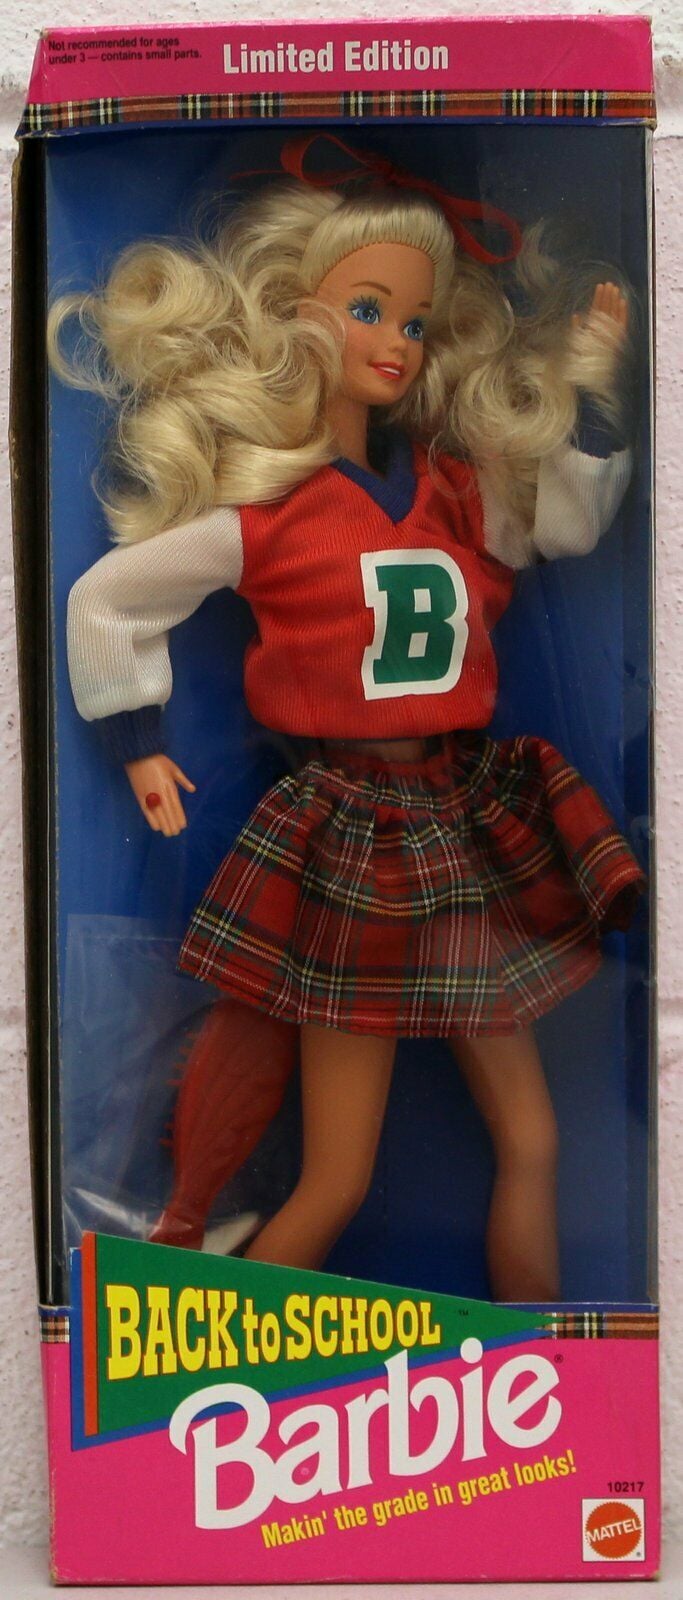 Back to School Barbie Doll